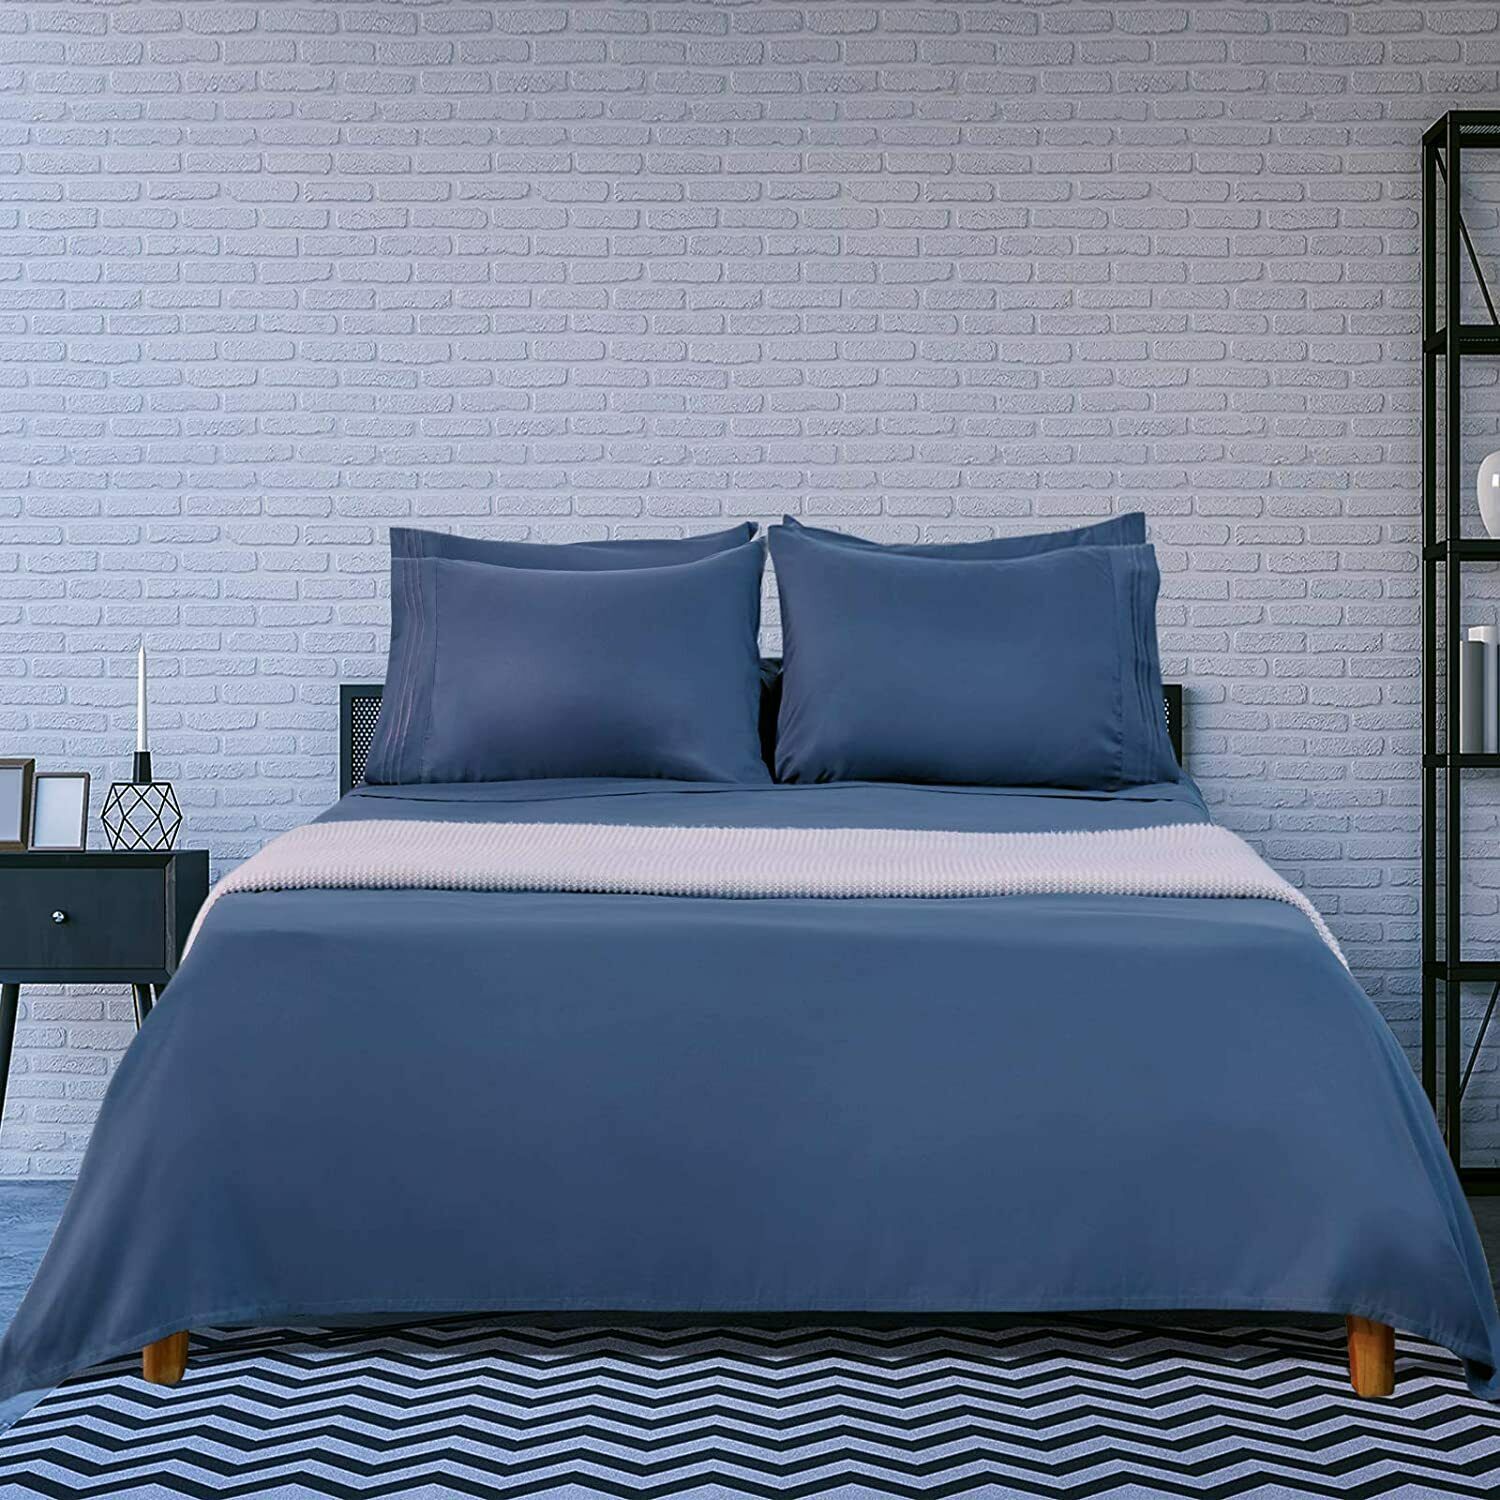 King Bed Sheet Set, 16-inch Deep Pocket Sheet, 4 Piece Hotel Luxury Soft Bedding - $39.59